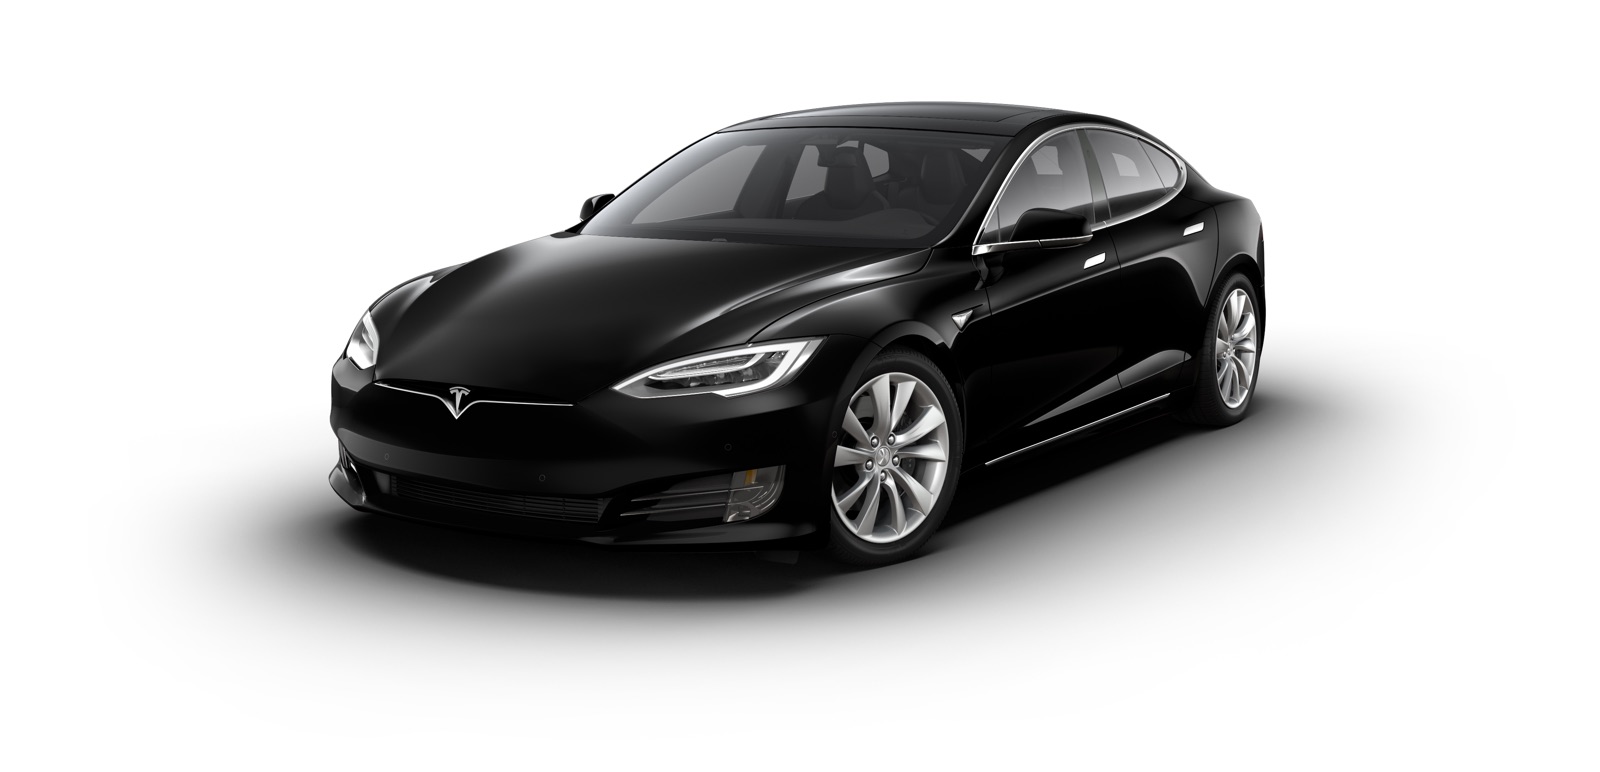 Tesla4all - Tesla Rental, EV and Renewable Energy Consulting